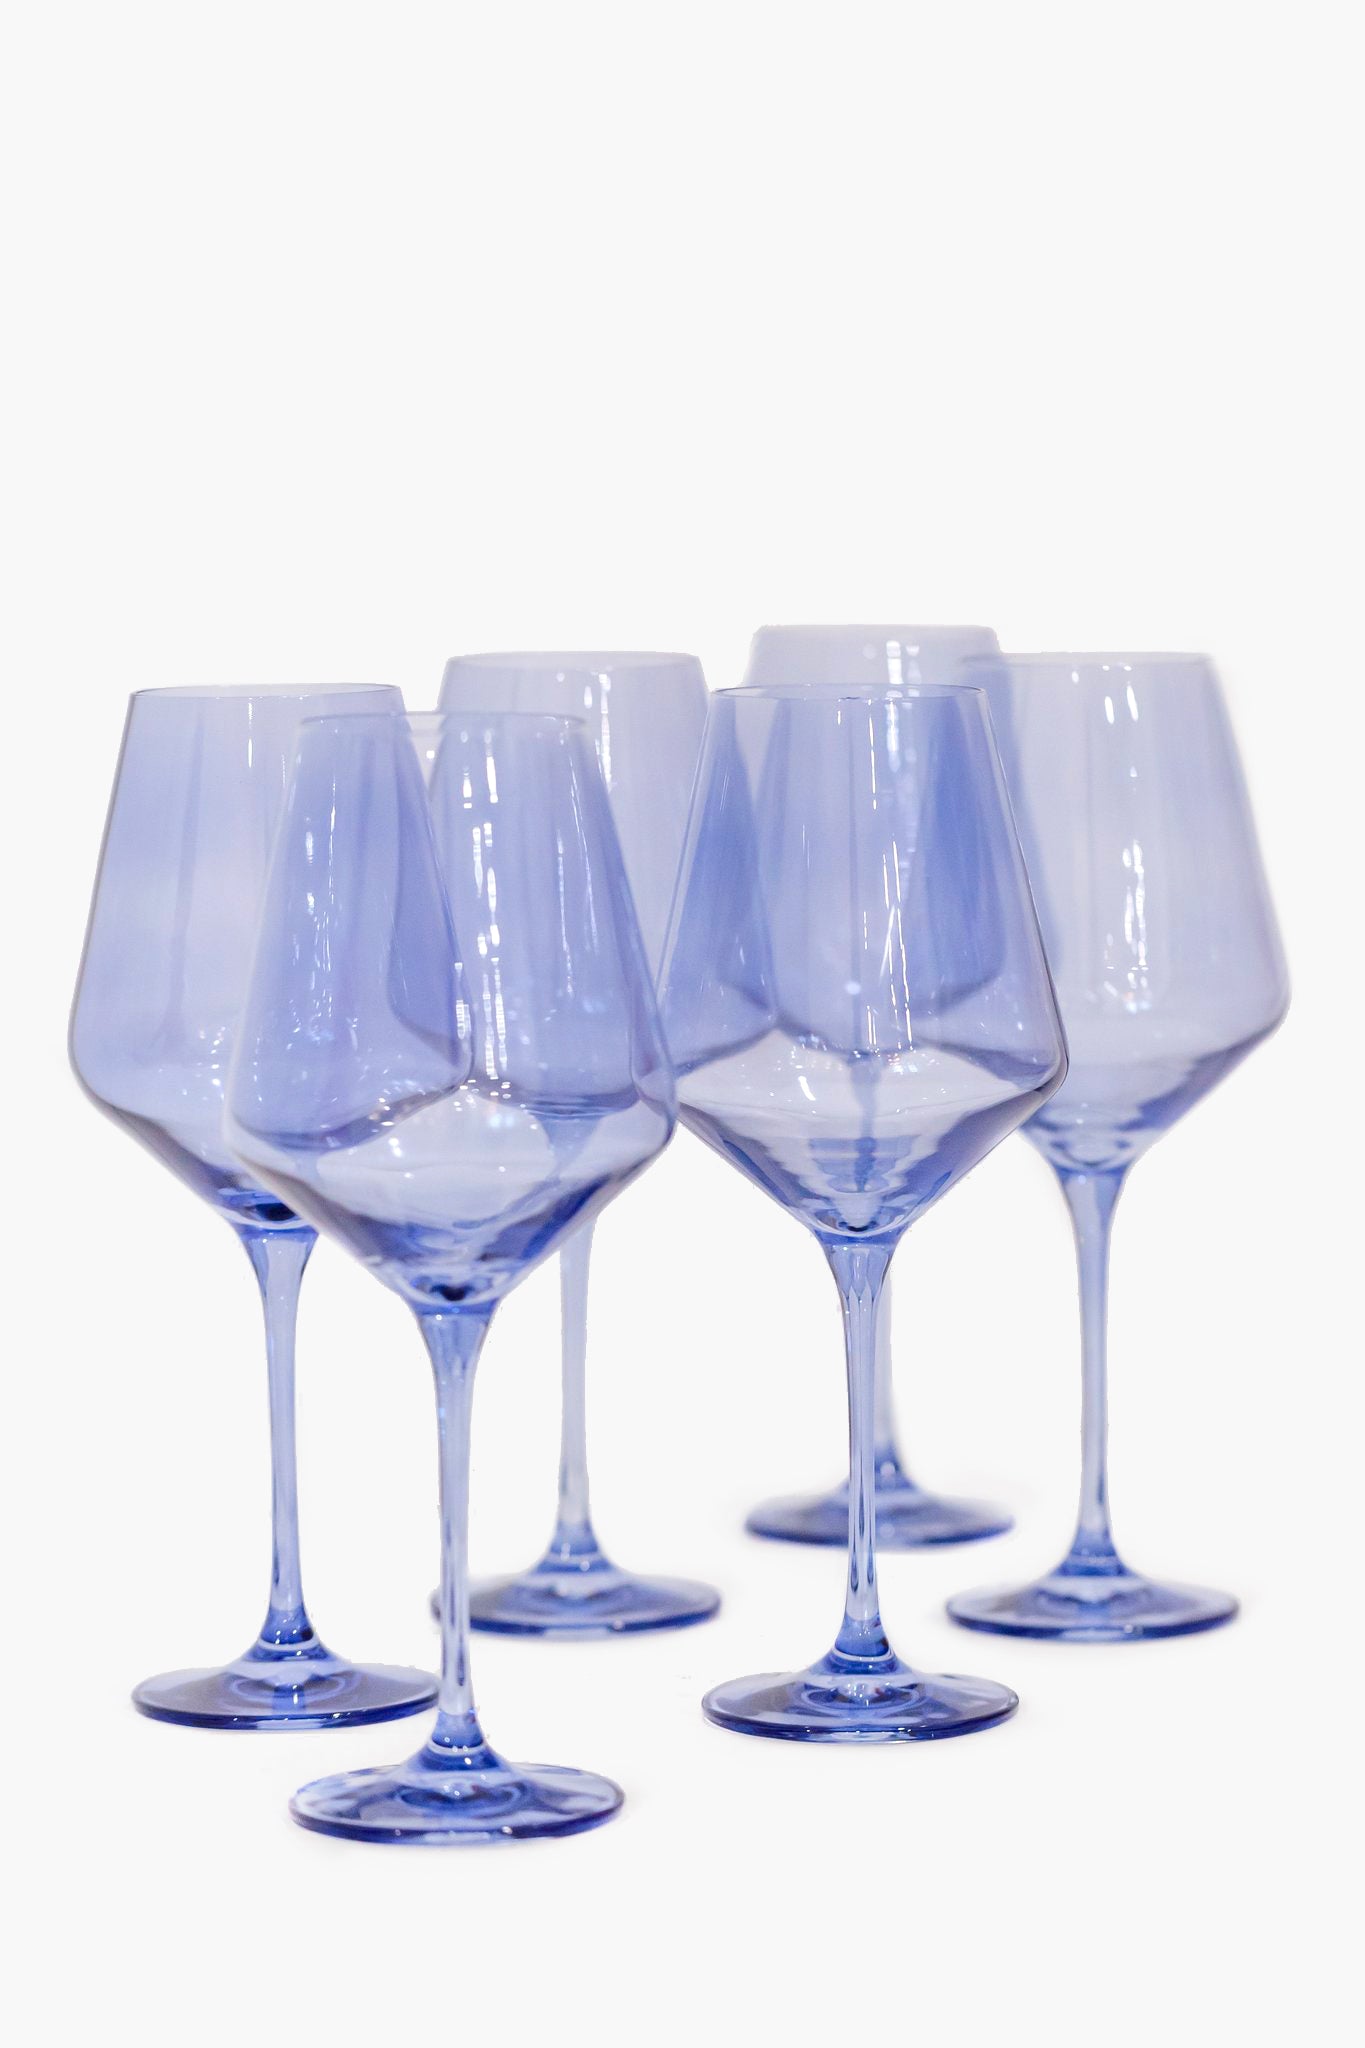 Estelle Colored Glass Stem Wineglasses, Set of 2 - Cobalt Blue